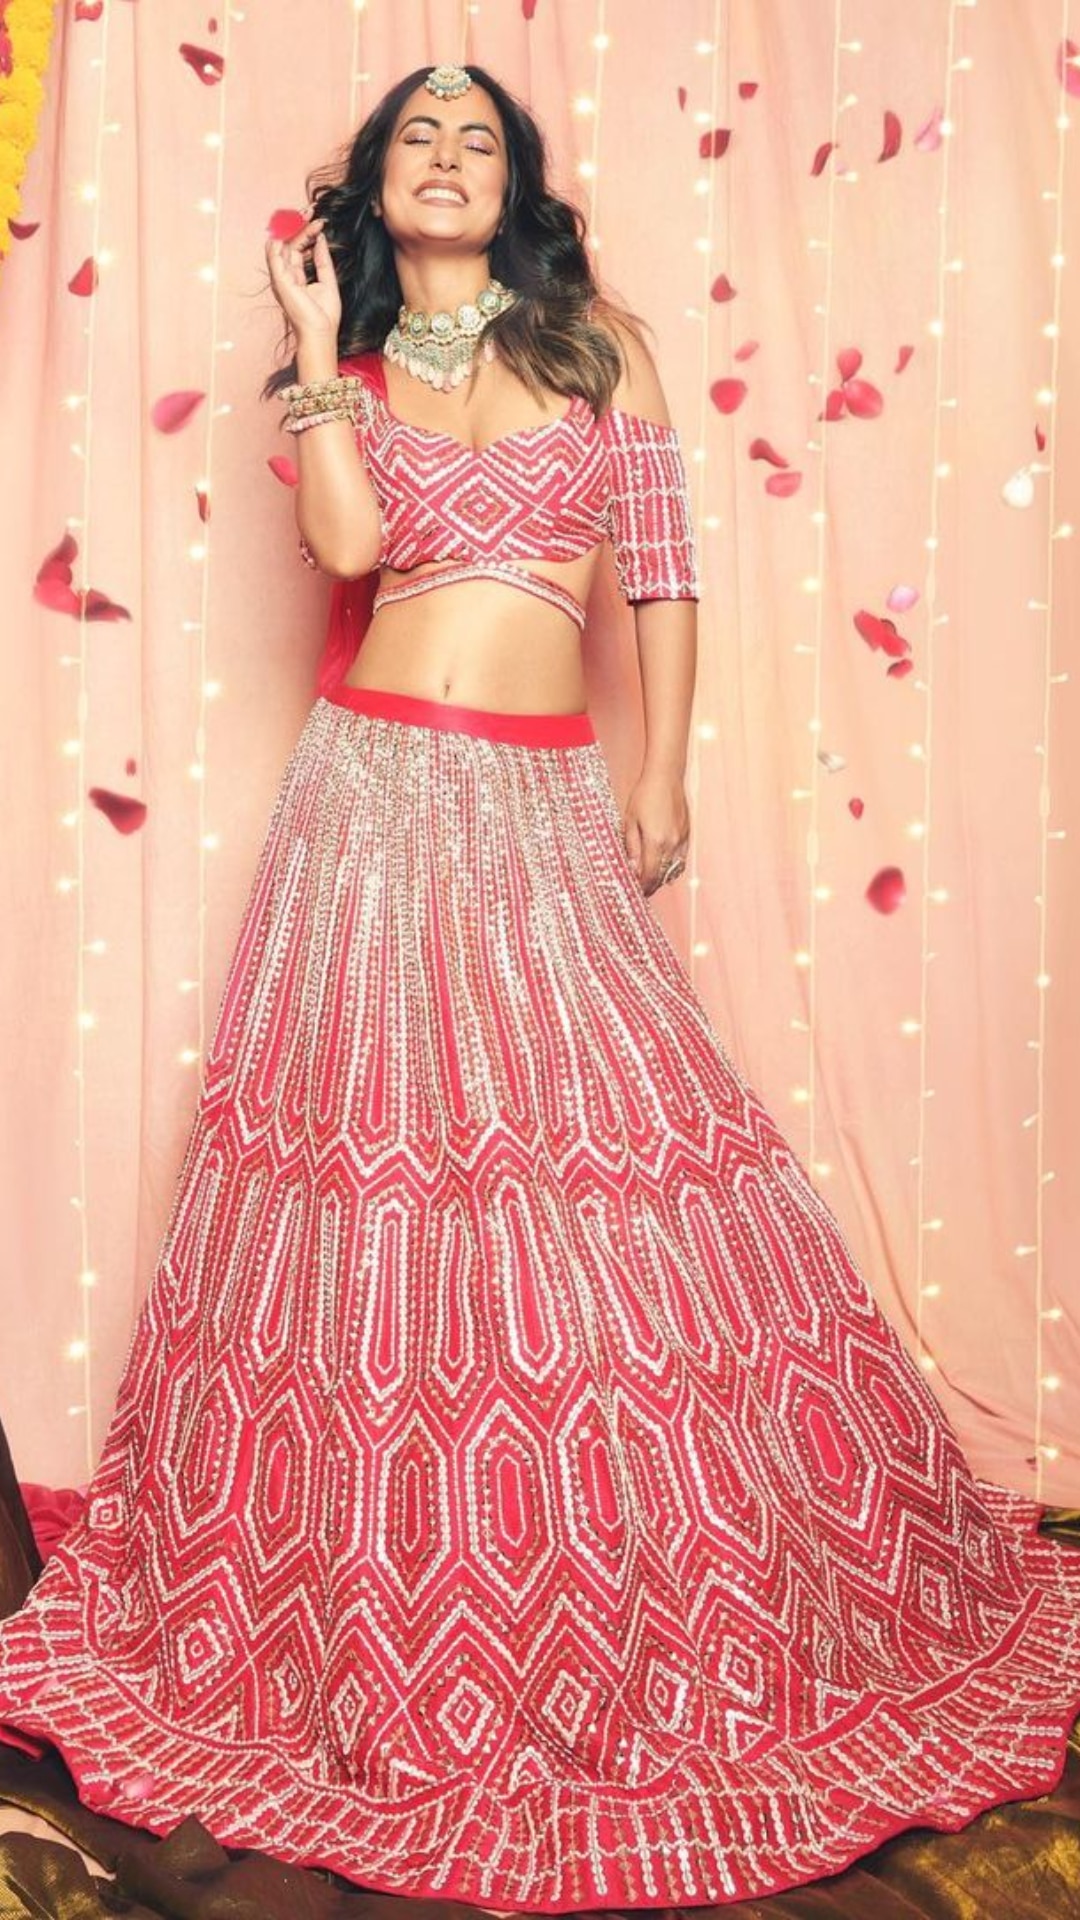 Hot Pink Lehenga Choli with Dupatta - Shafalie's Fashions